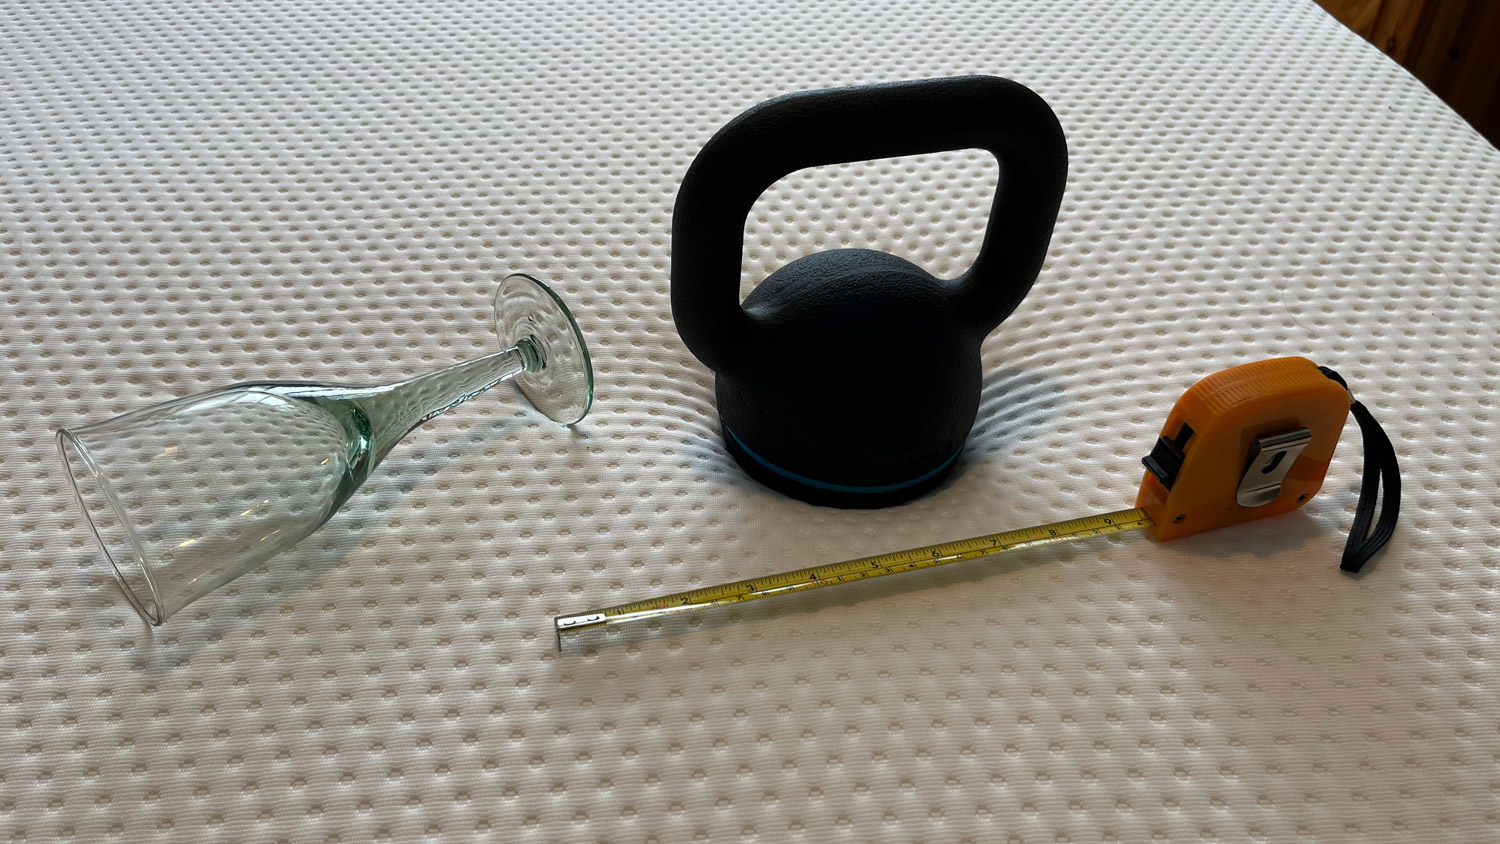 A wine glass, kettlebell and tape measure on the Emma NextGen Premium